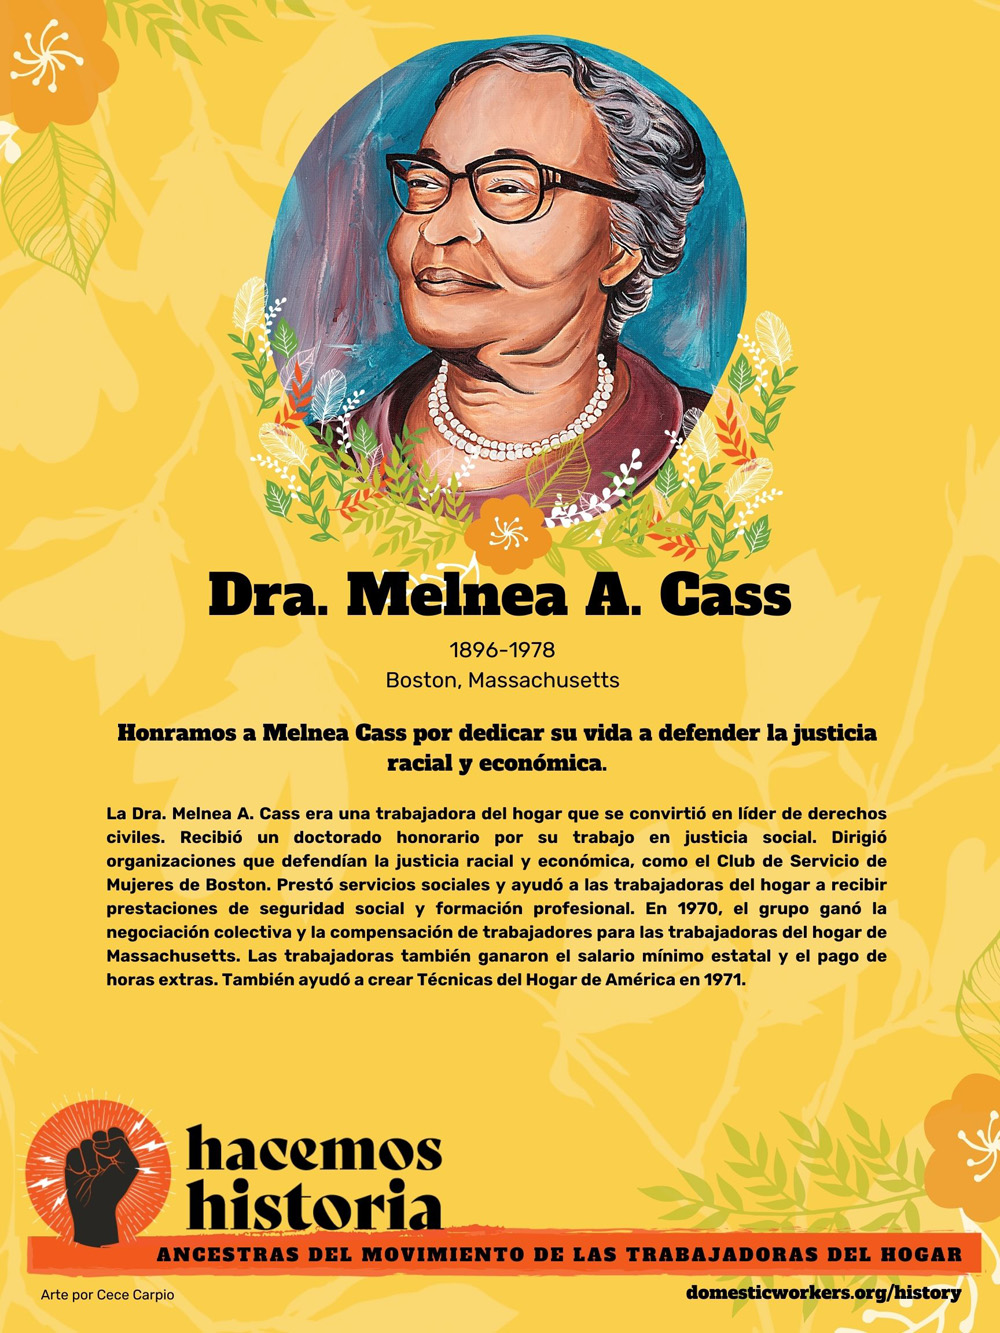 Retratos de las ancestras del movimiento de trabajadoras de hogar: Dra. Melnea A. Cass